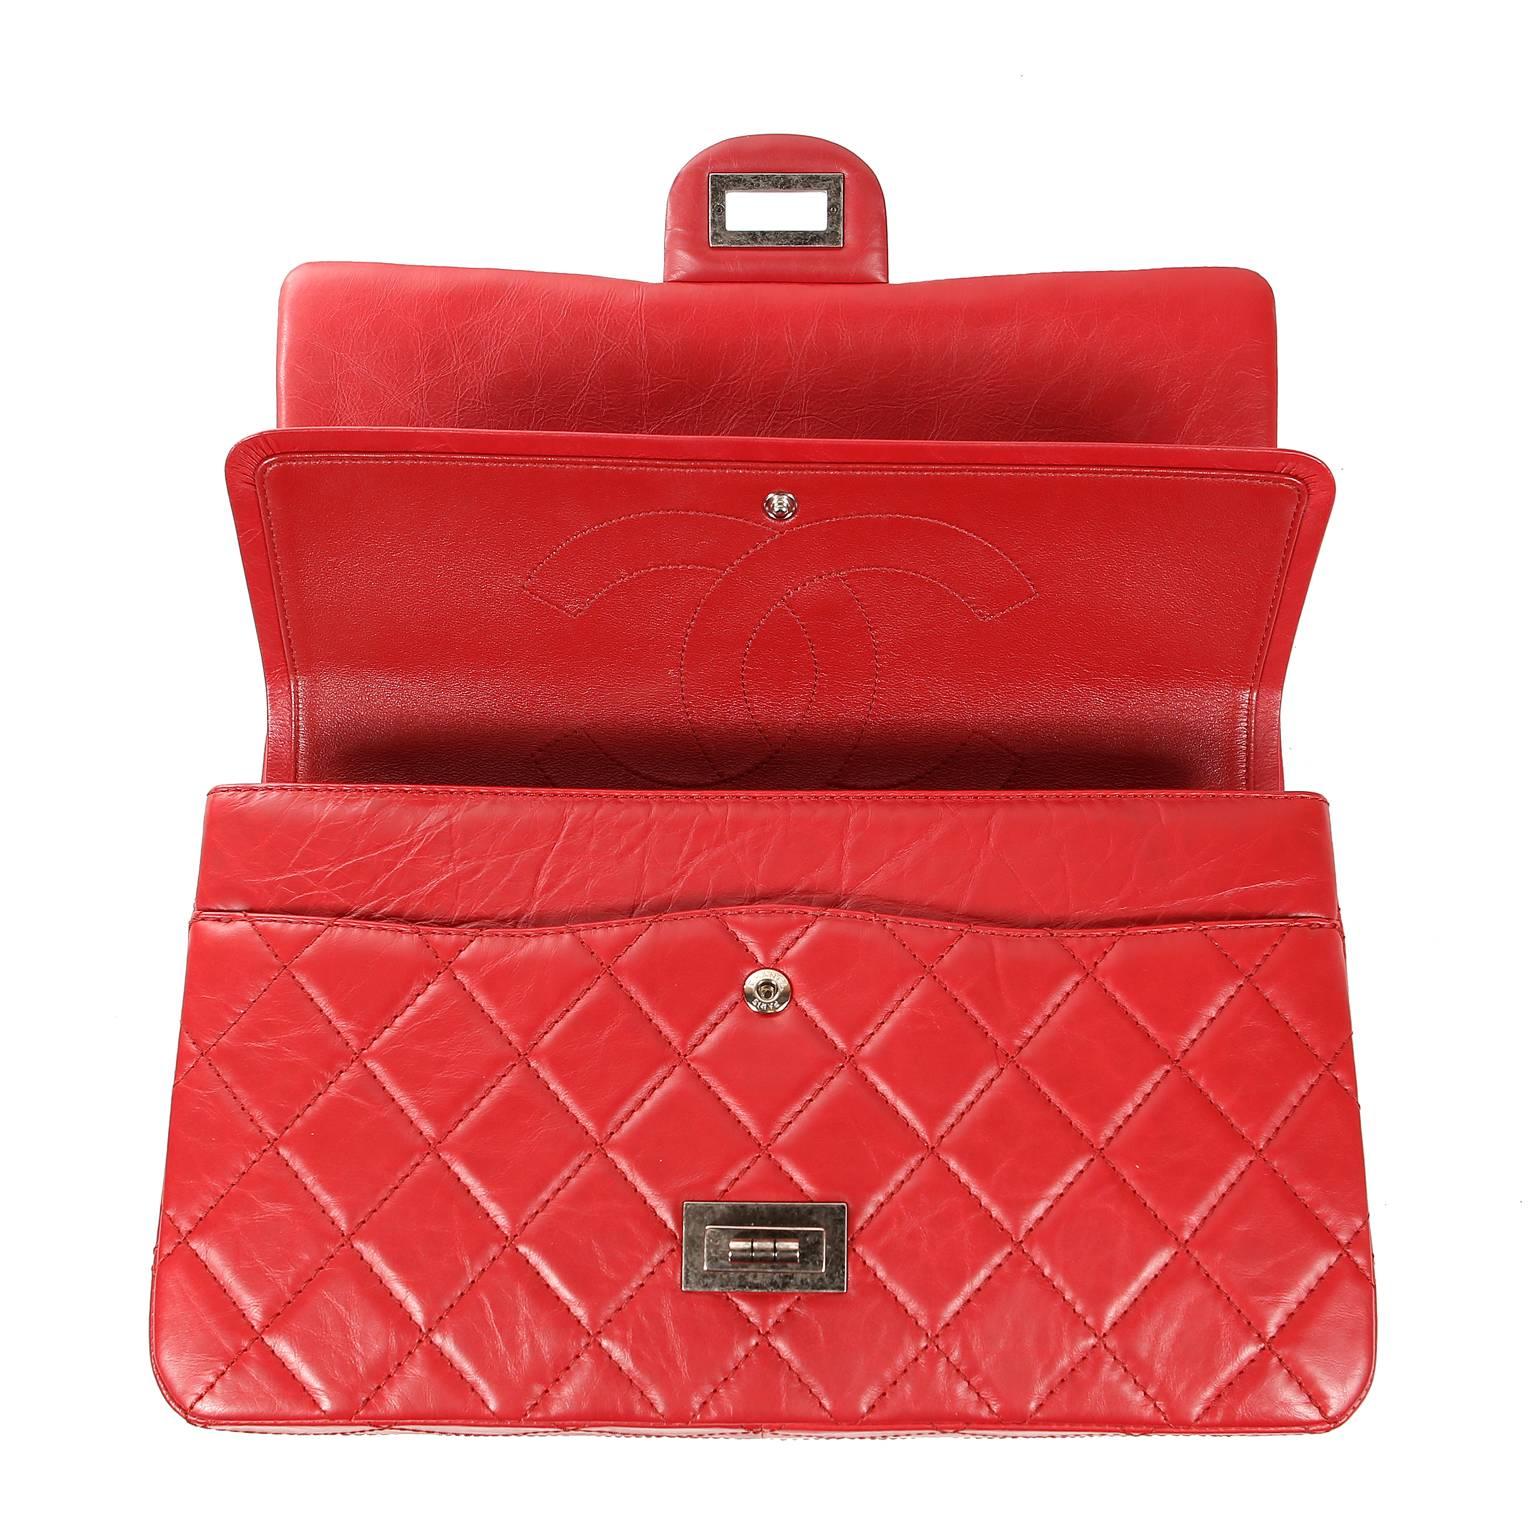 Women's Chanel Red Calfskin 2.55 Reissue Flap Bag- 227 size